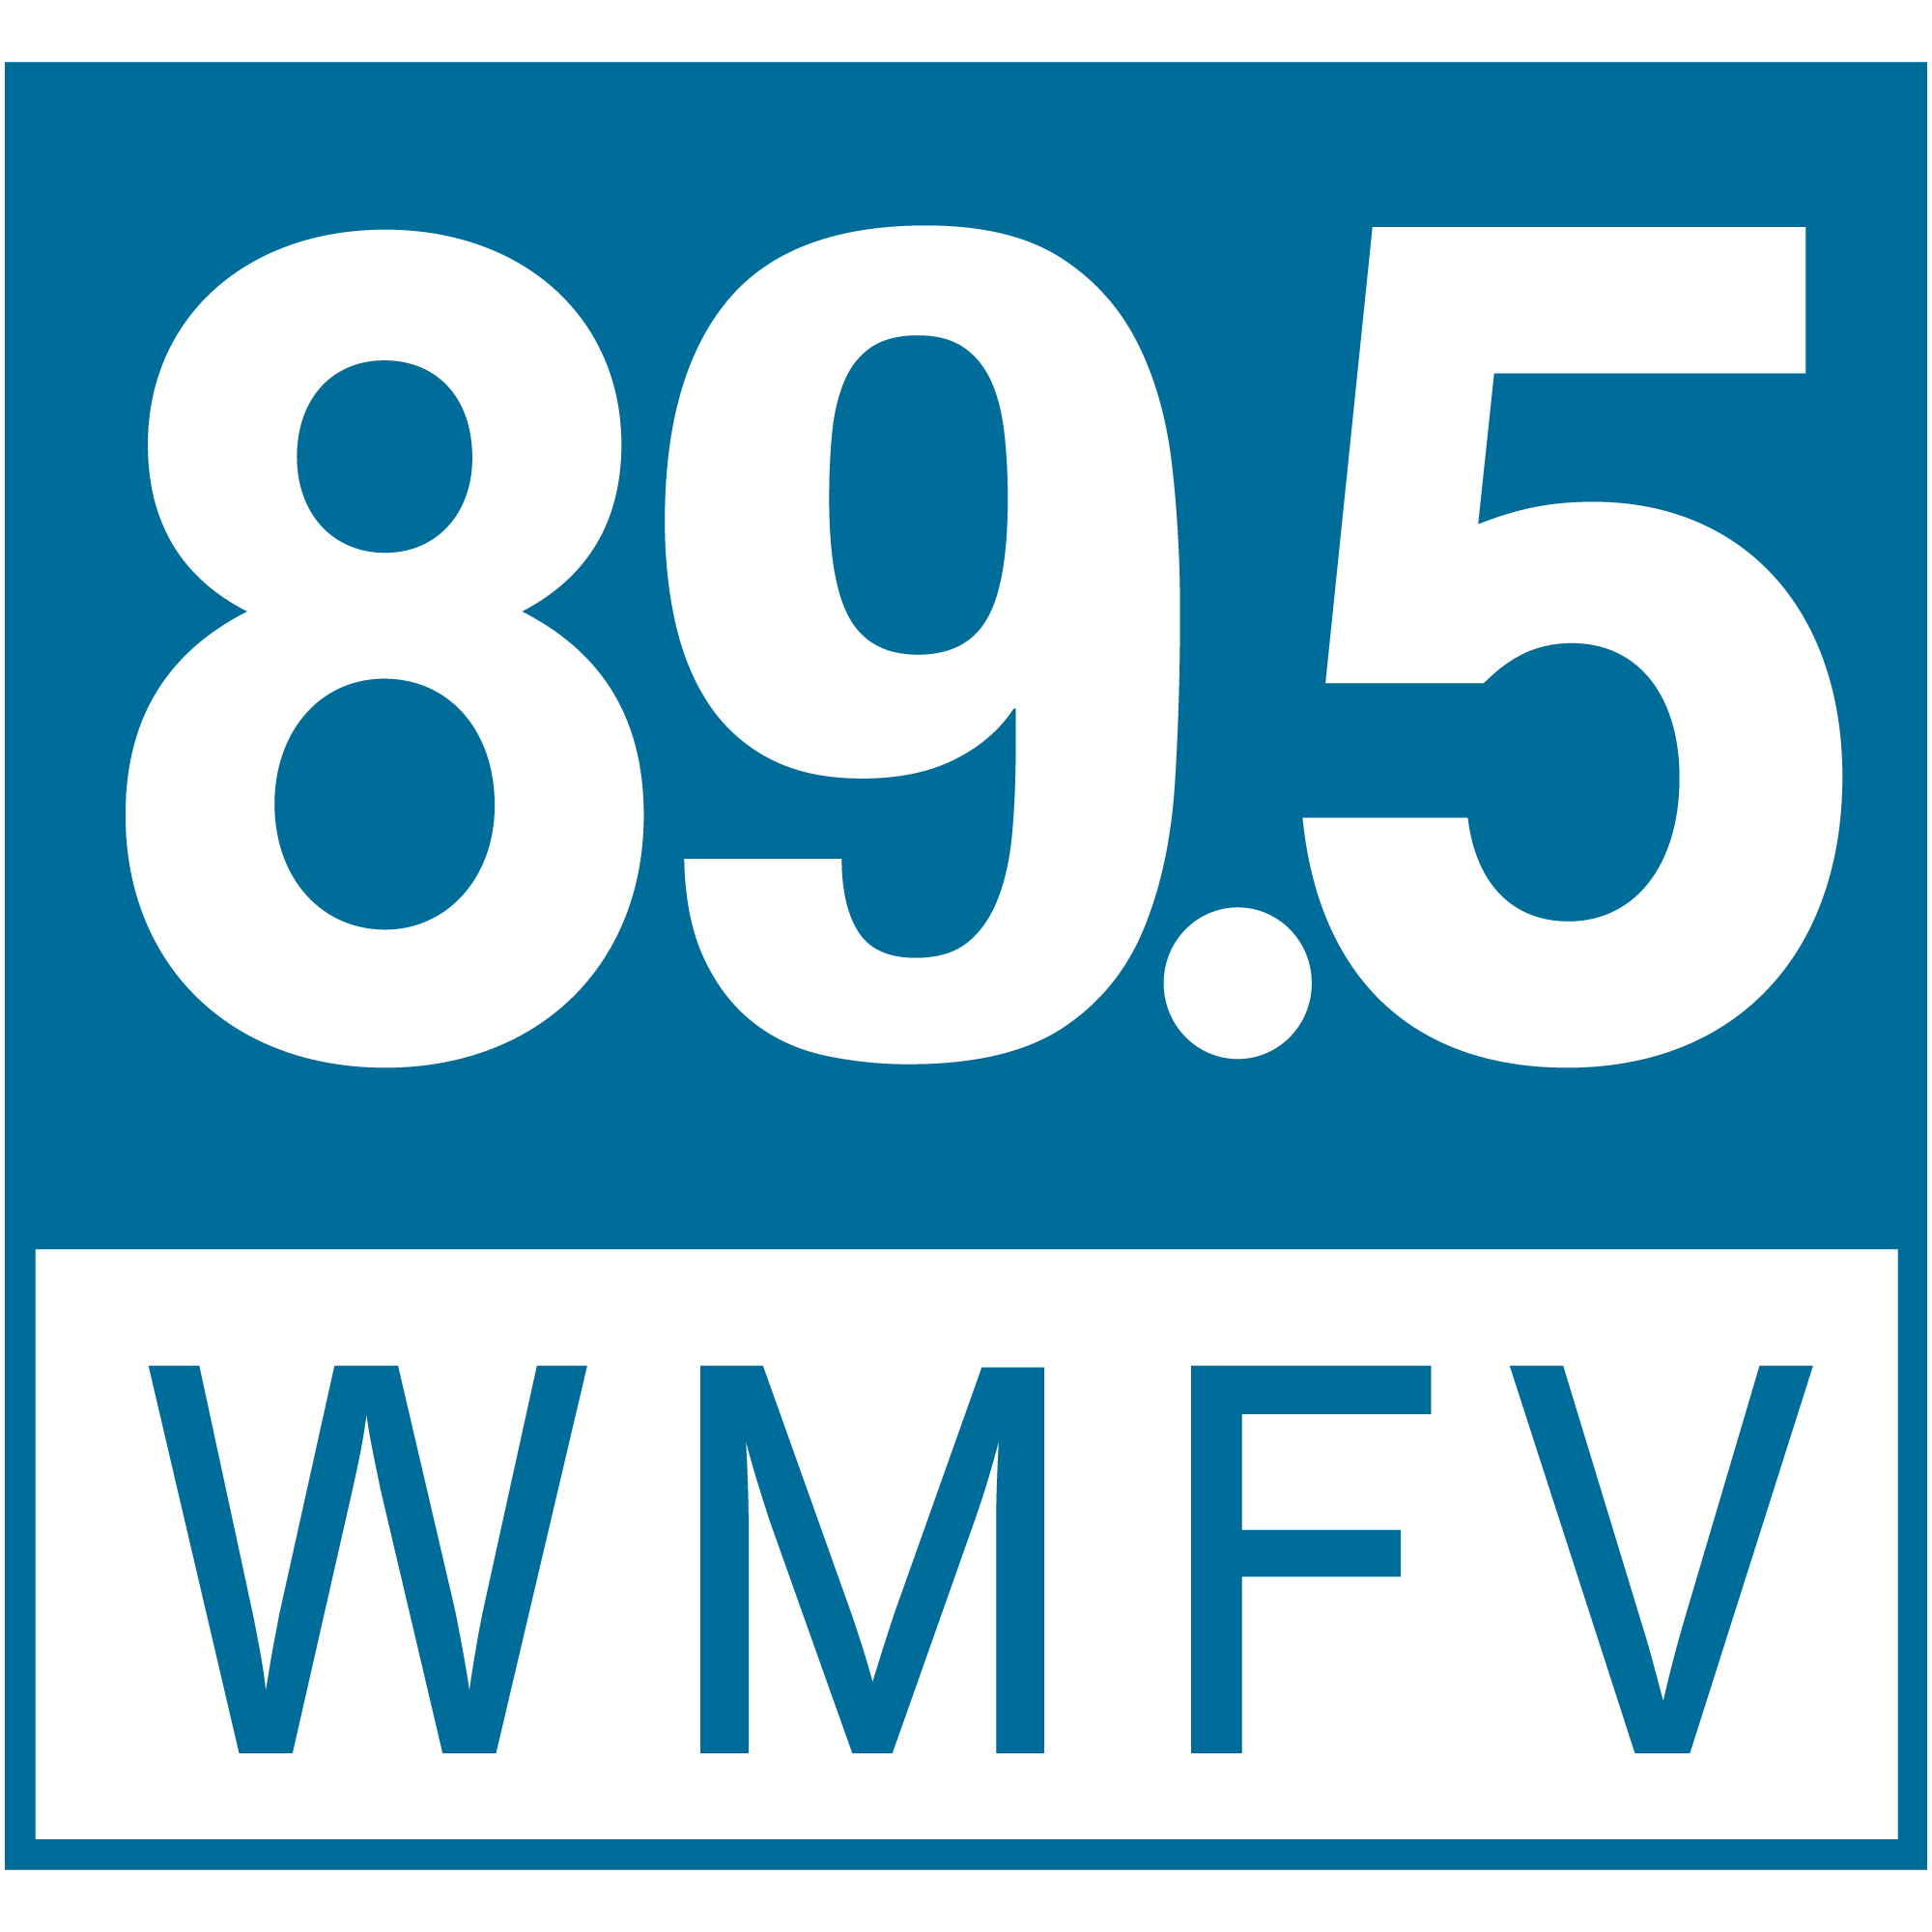 89.5 WMFV logo